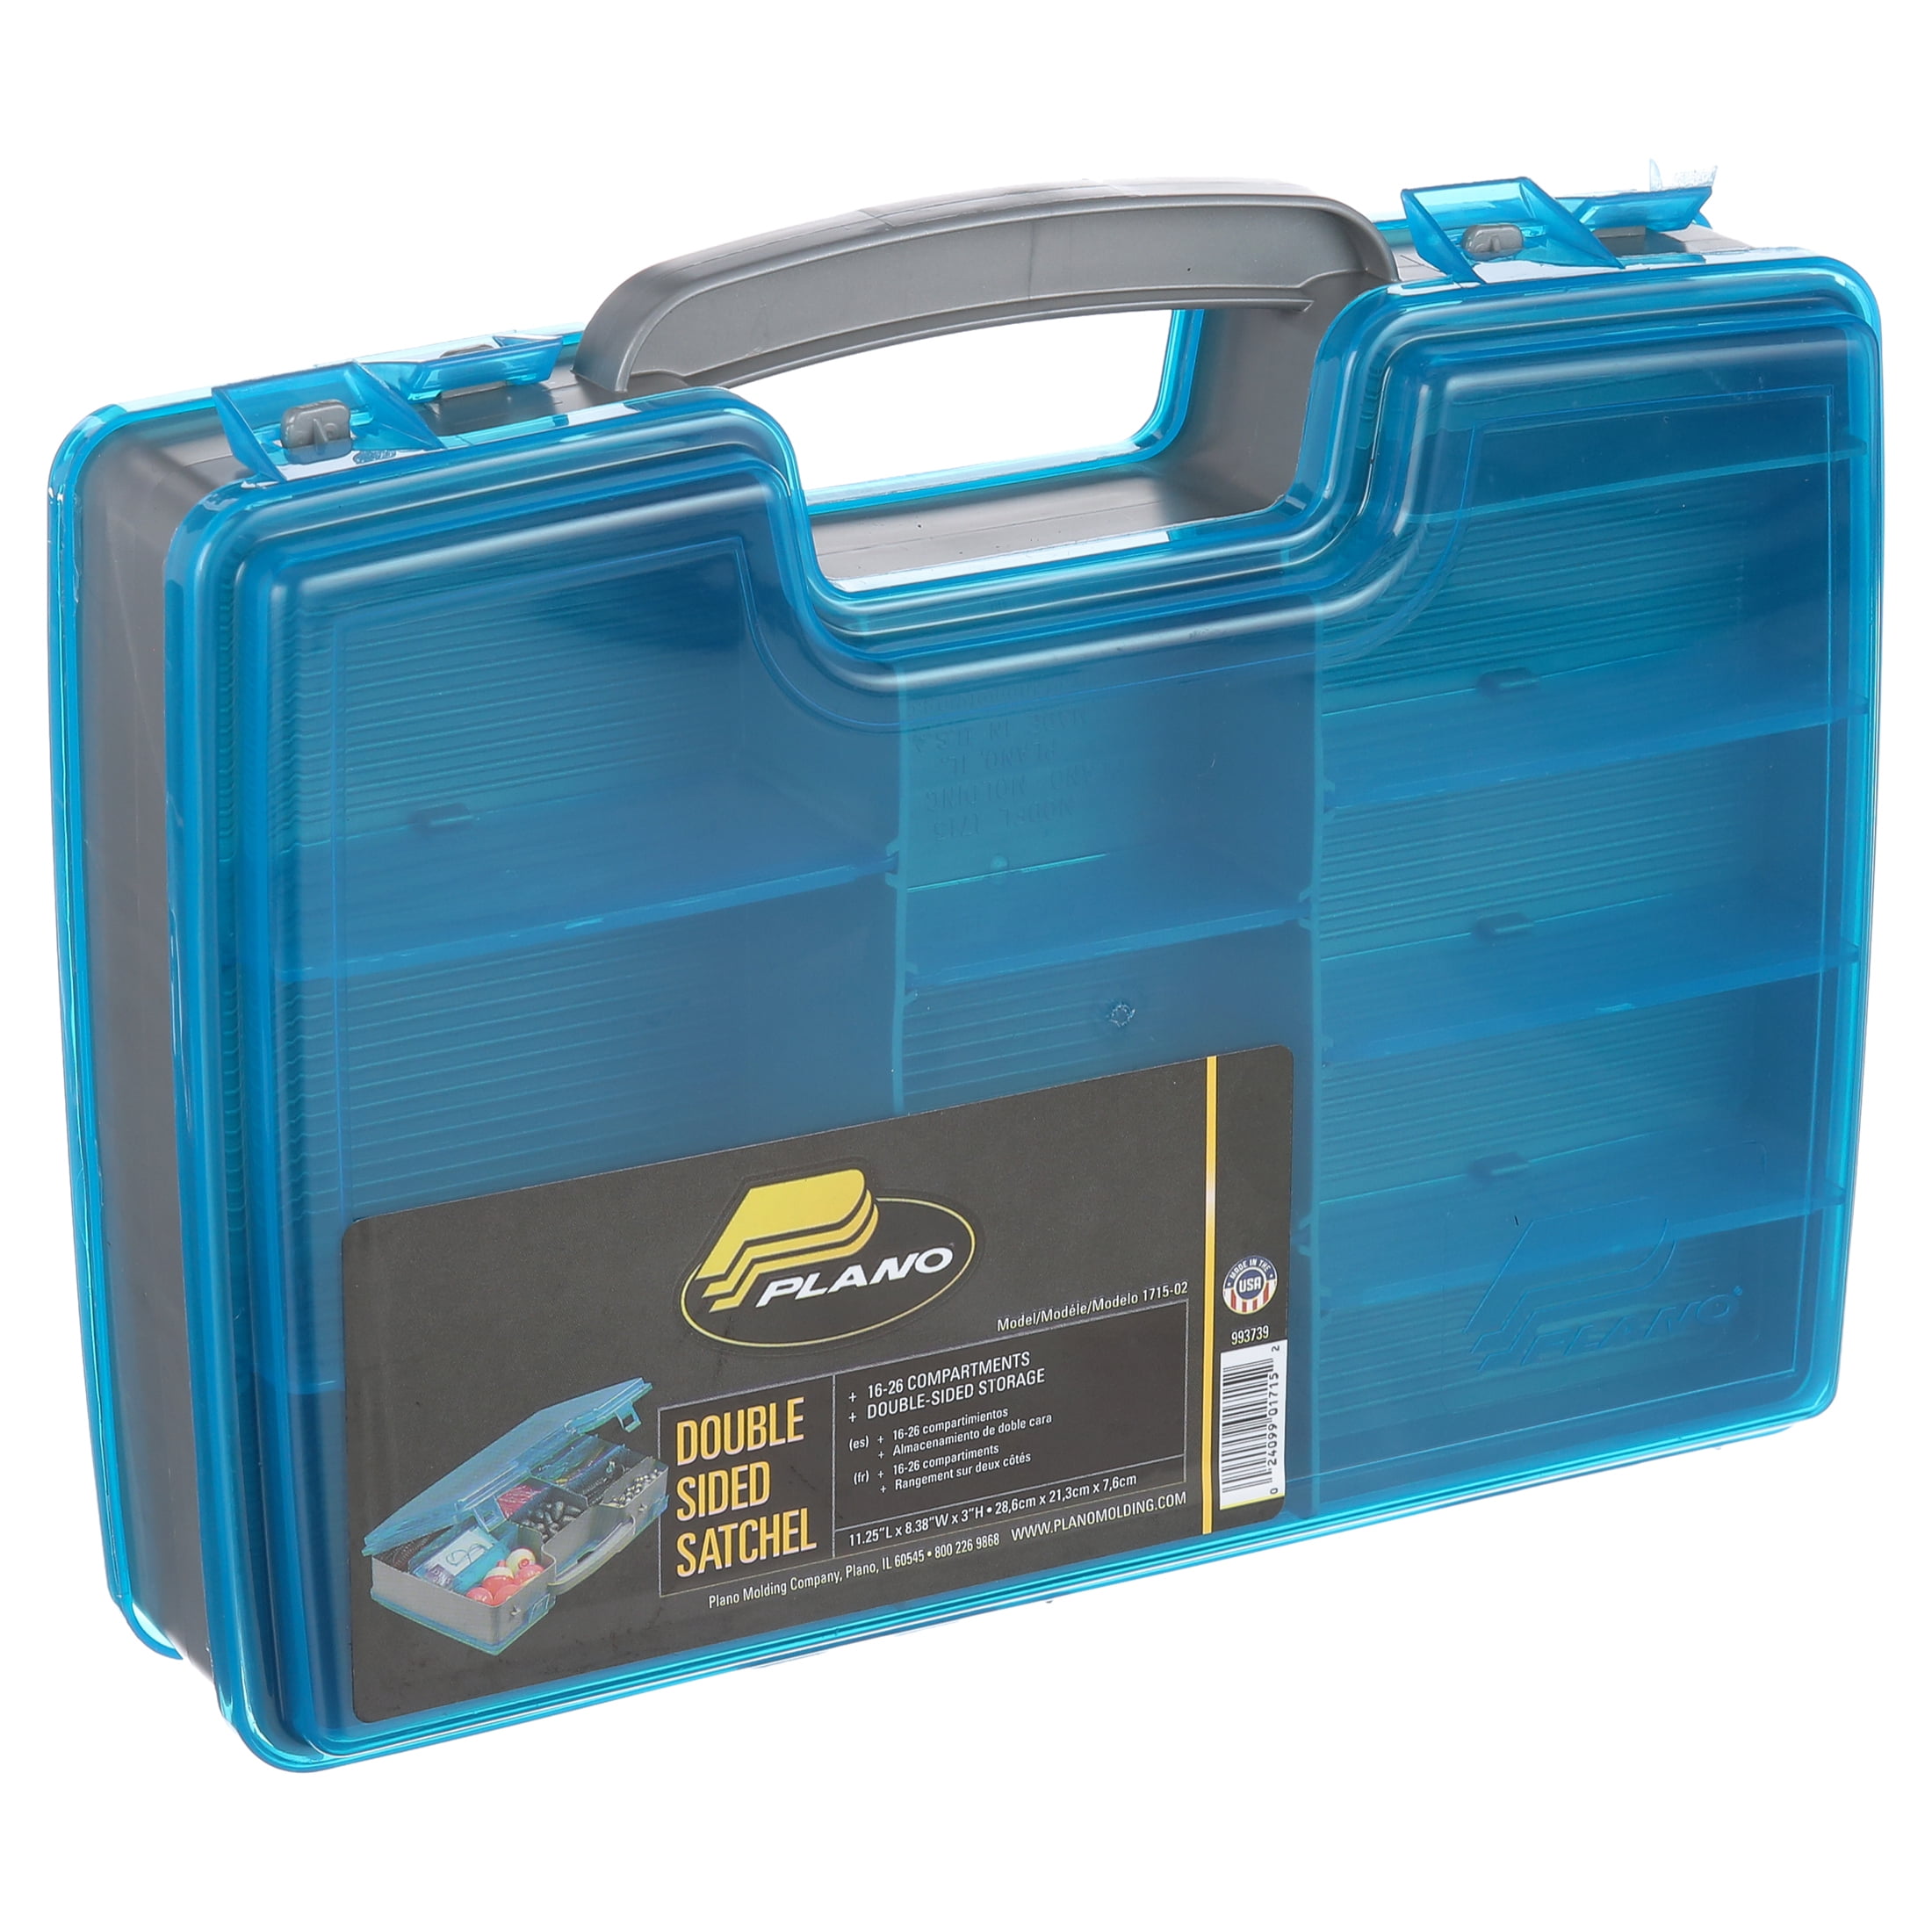 Plano 2-Tray Tackle Box - Blue/White, 14.25 x 8.5 x 8.125 Inch